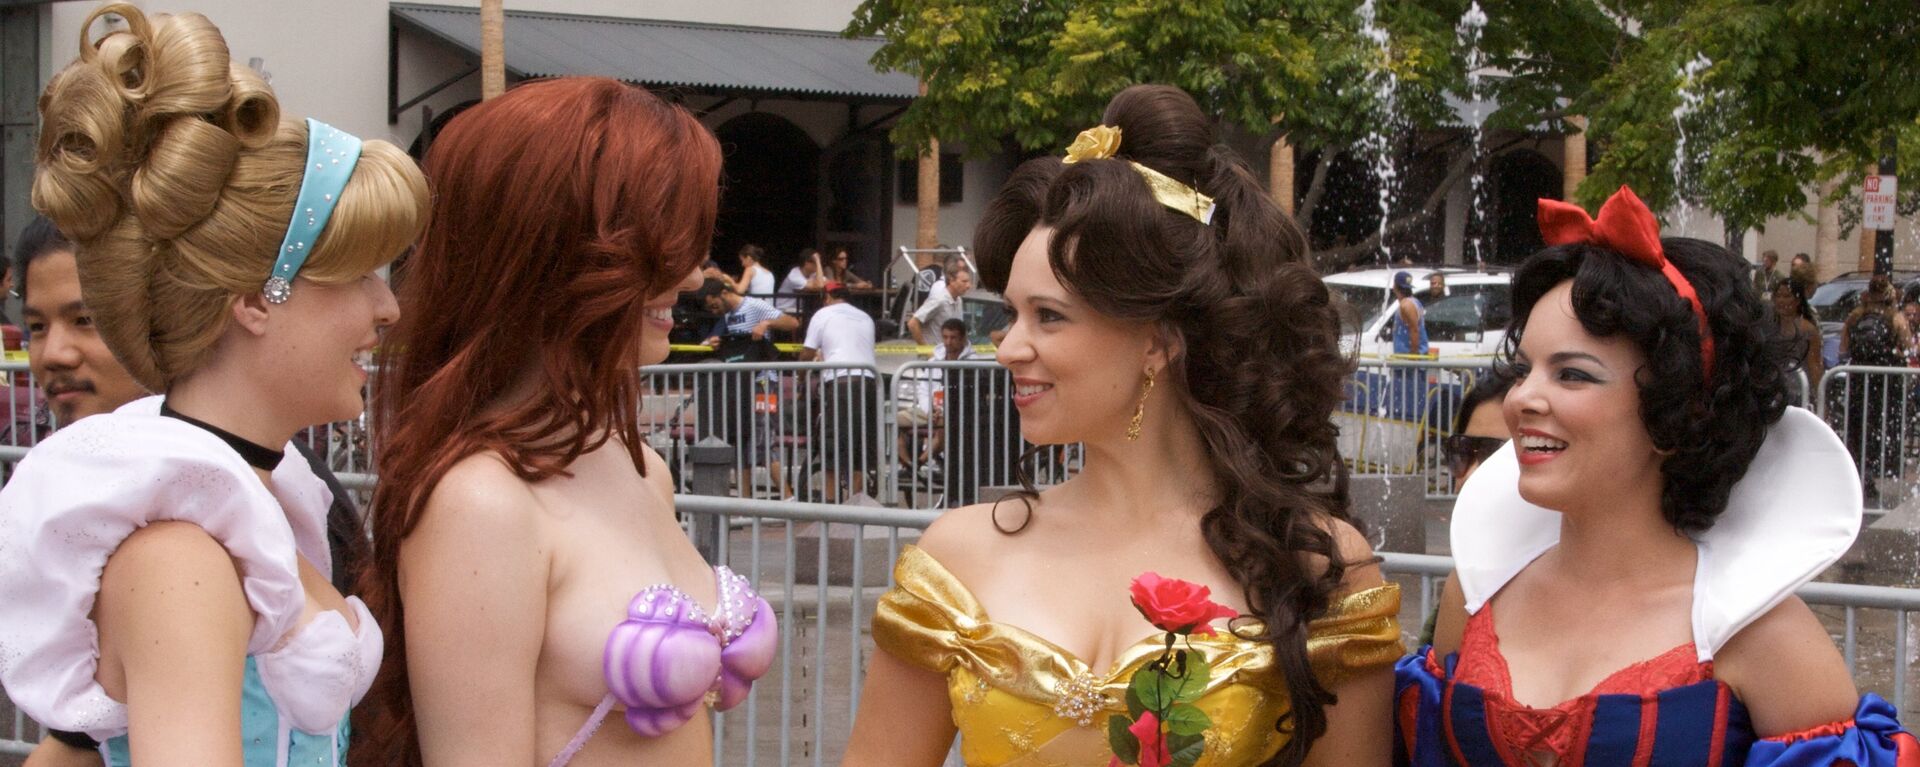 Muchachas vestidas de princesas de Disney - Sputnik Mundo, 1920, 05.01.2017